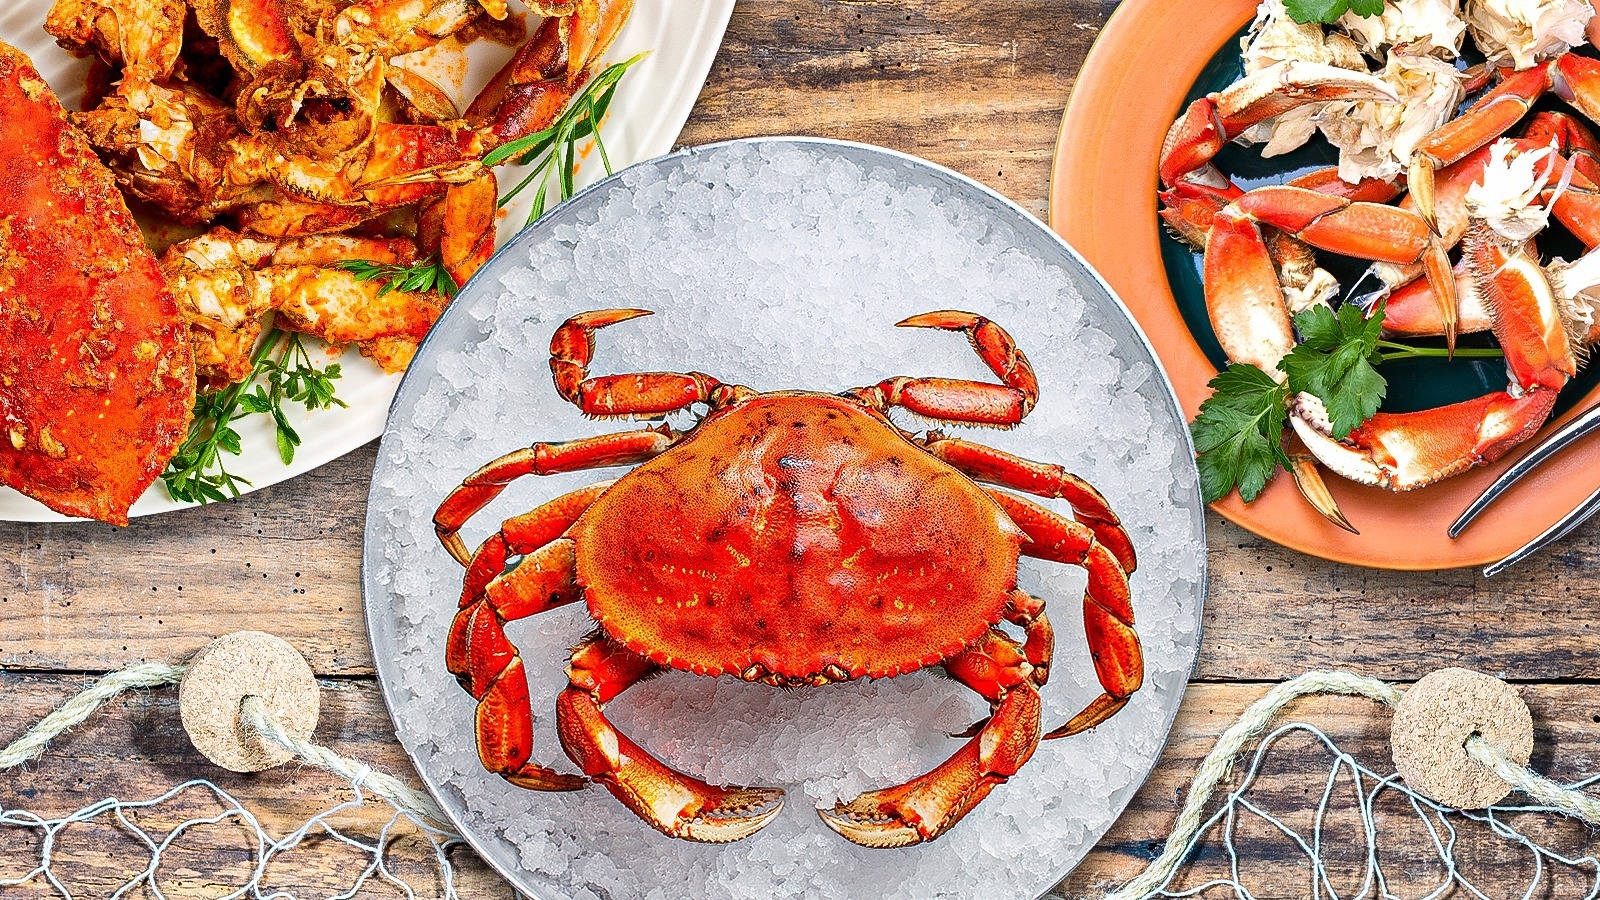 What Makes Dungeness Crab Unique